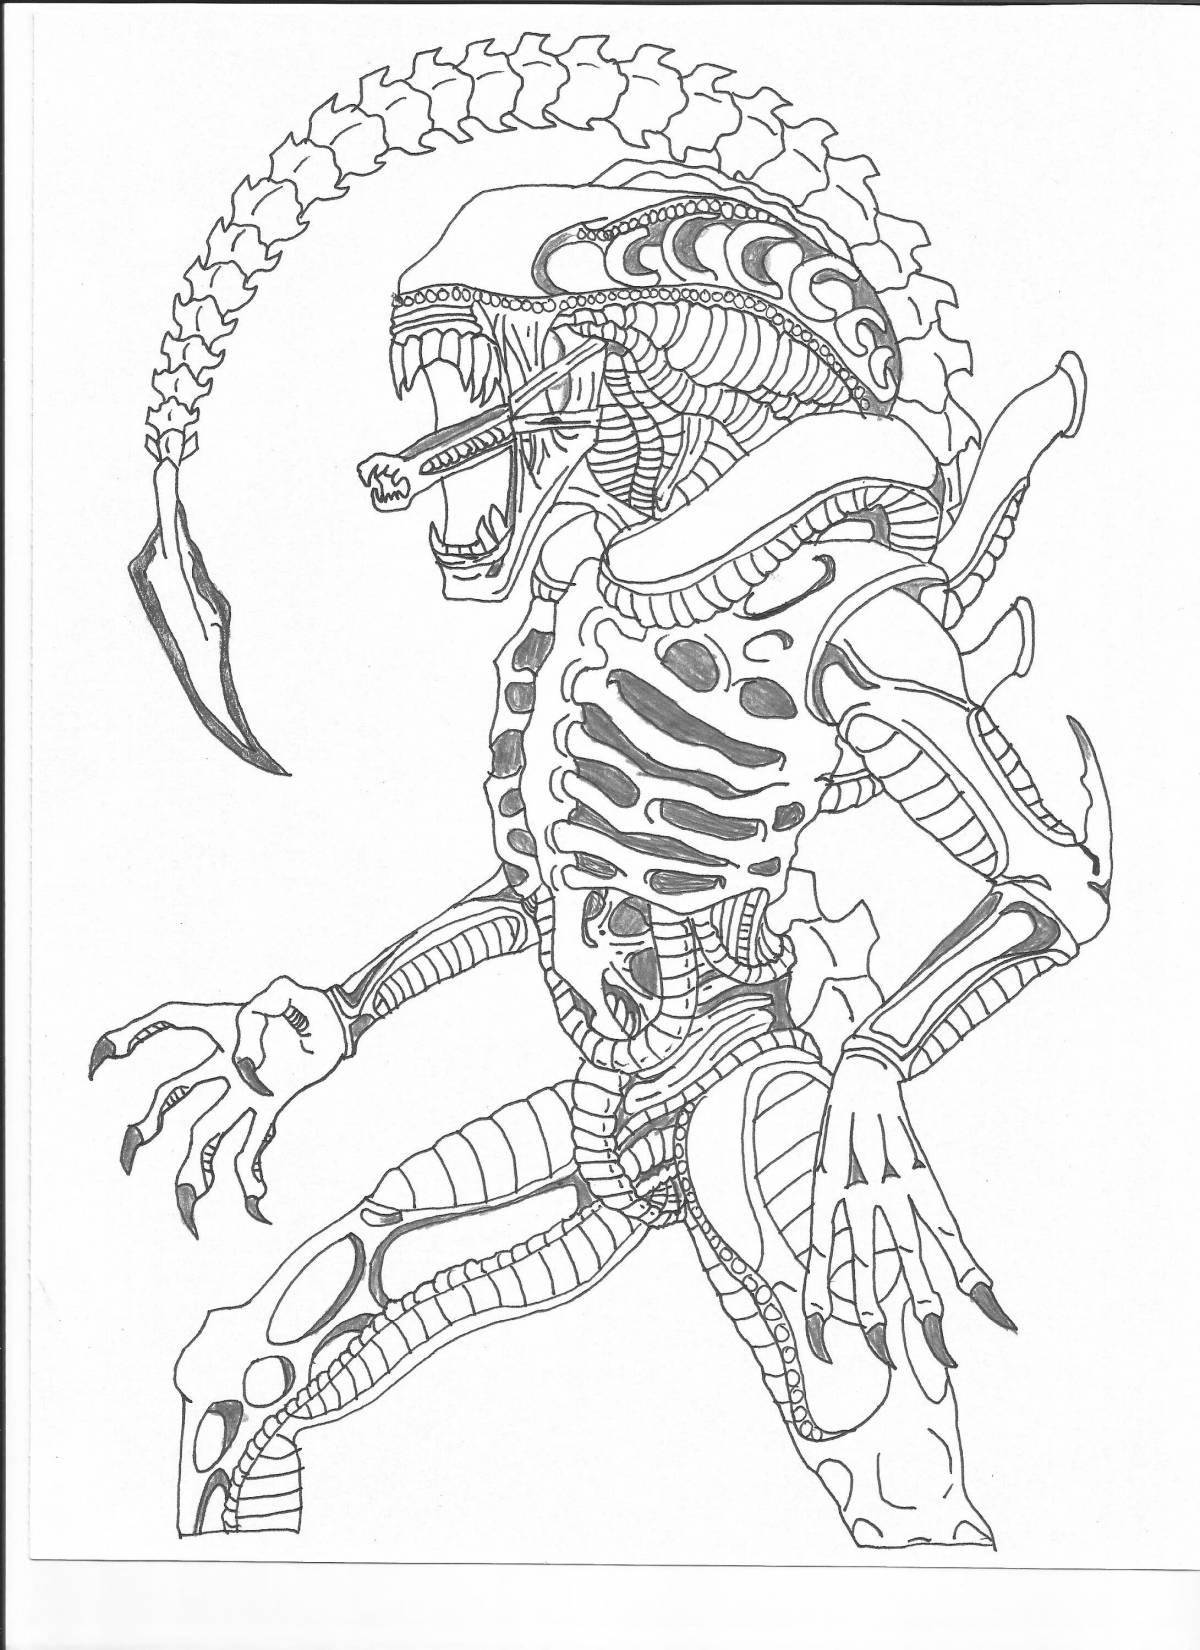 Coloring mystical alien and predator